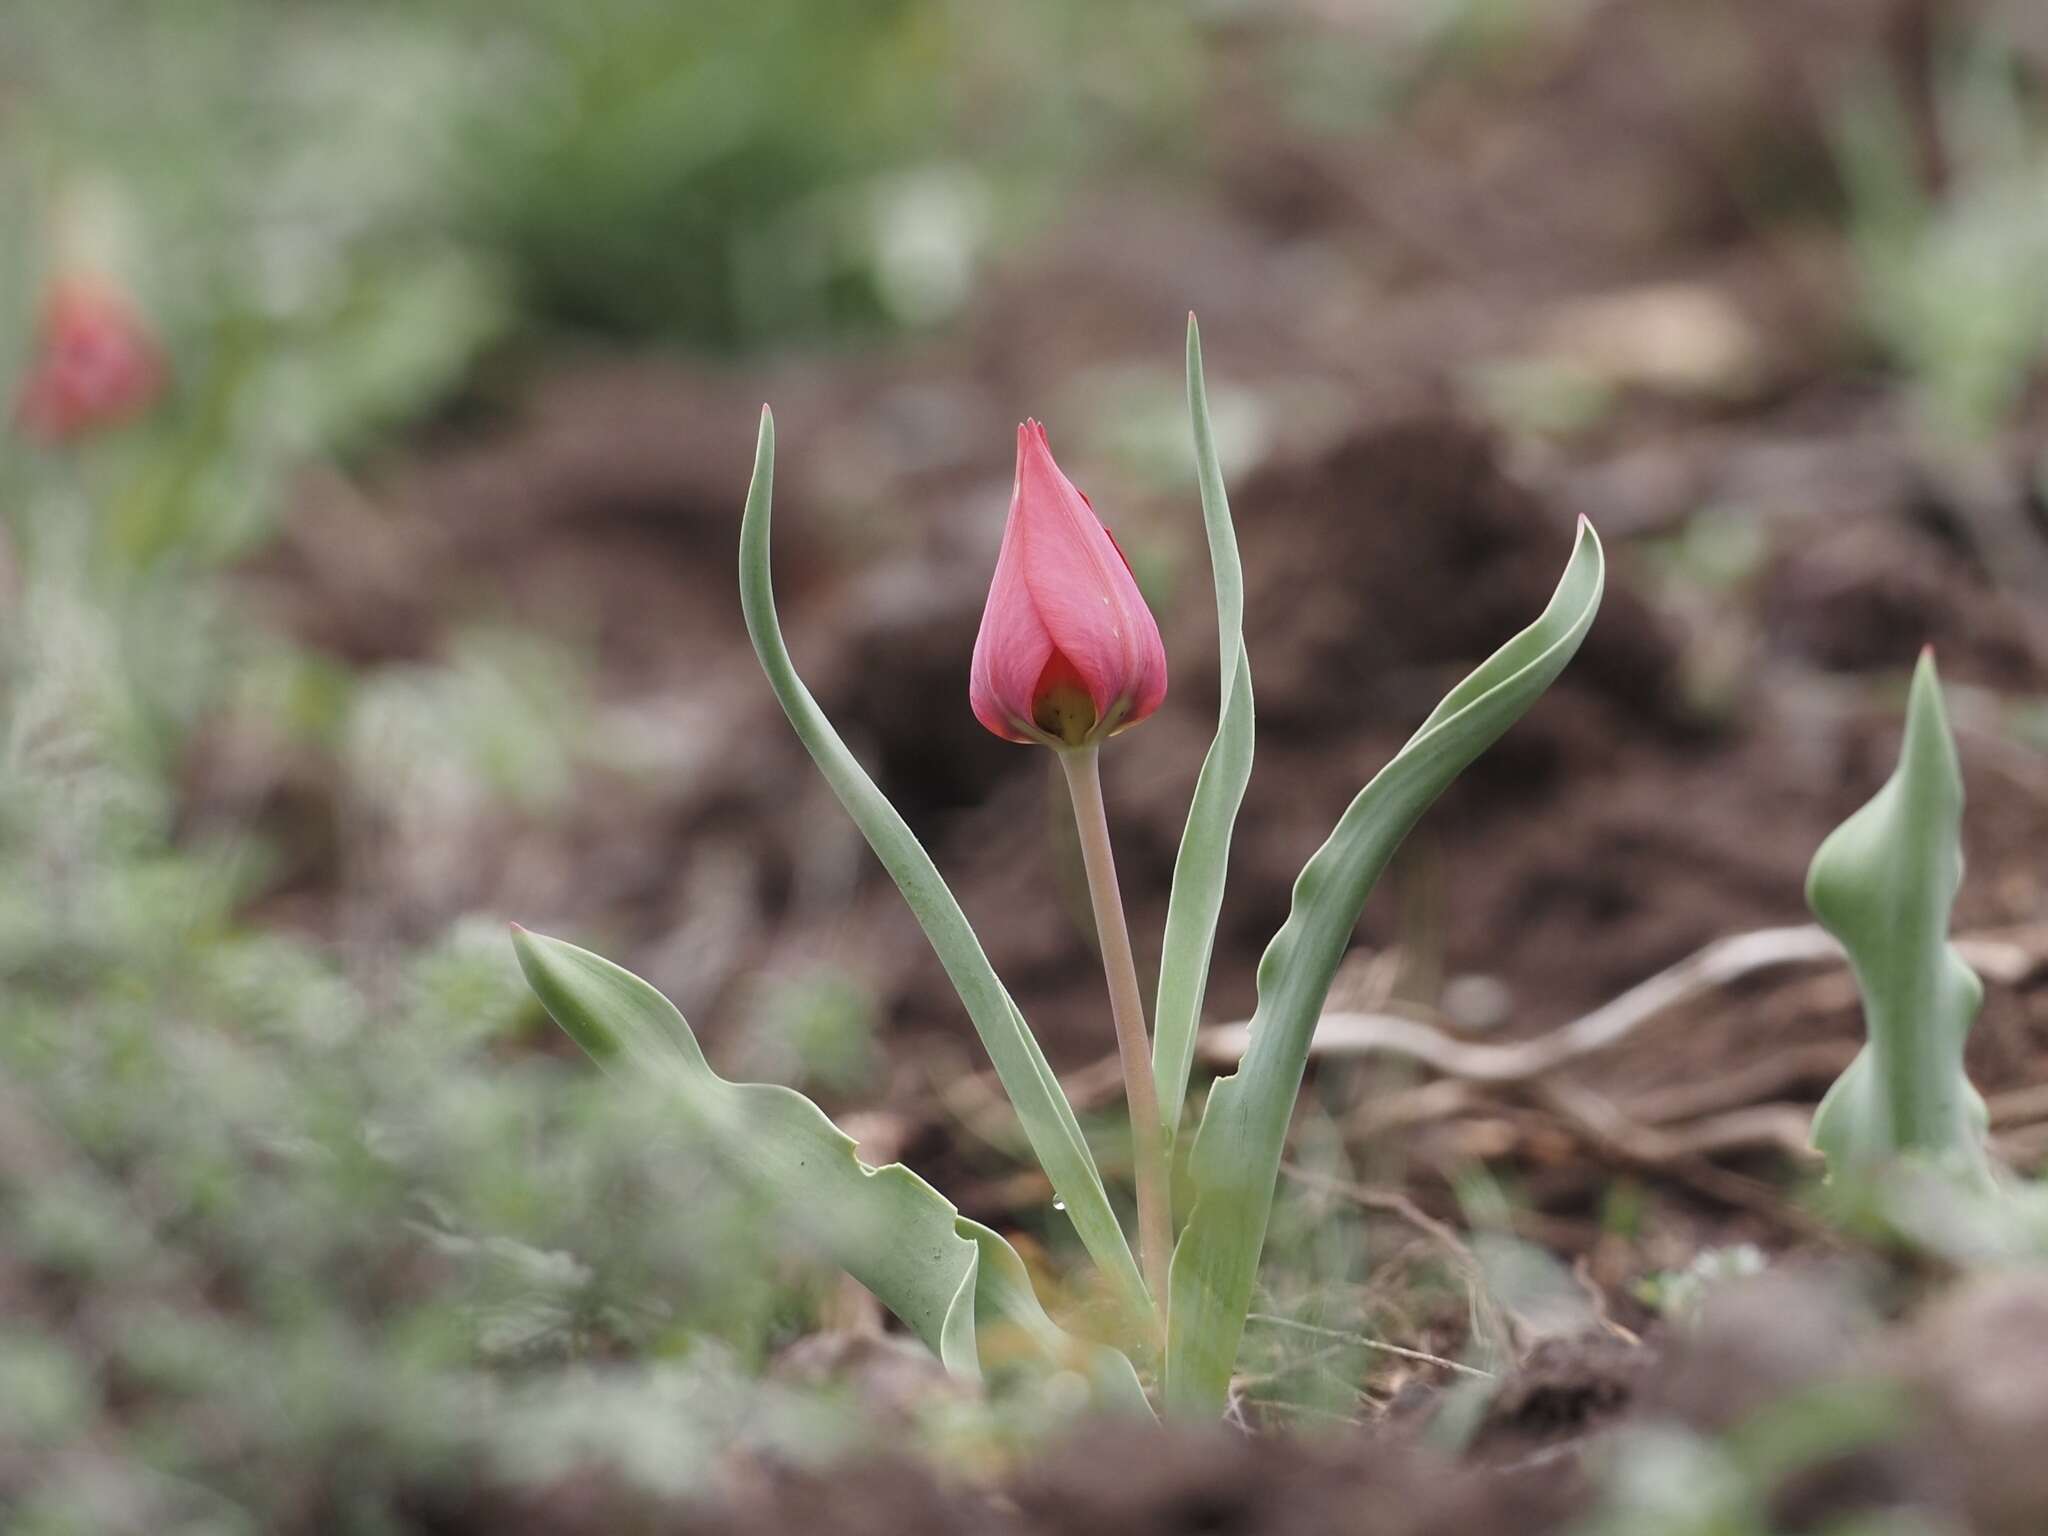 Image of Tulipa julia K. Koch